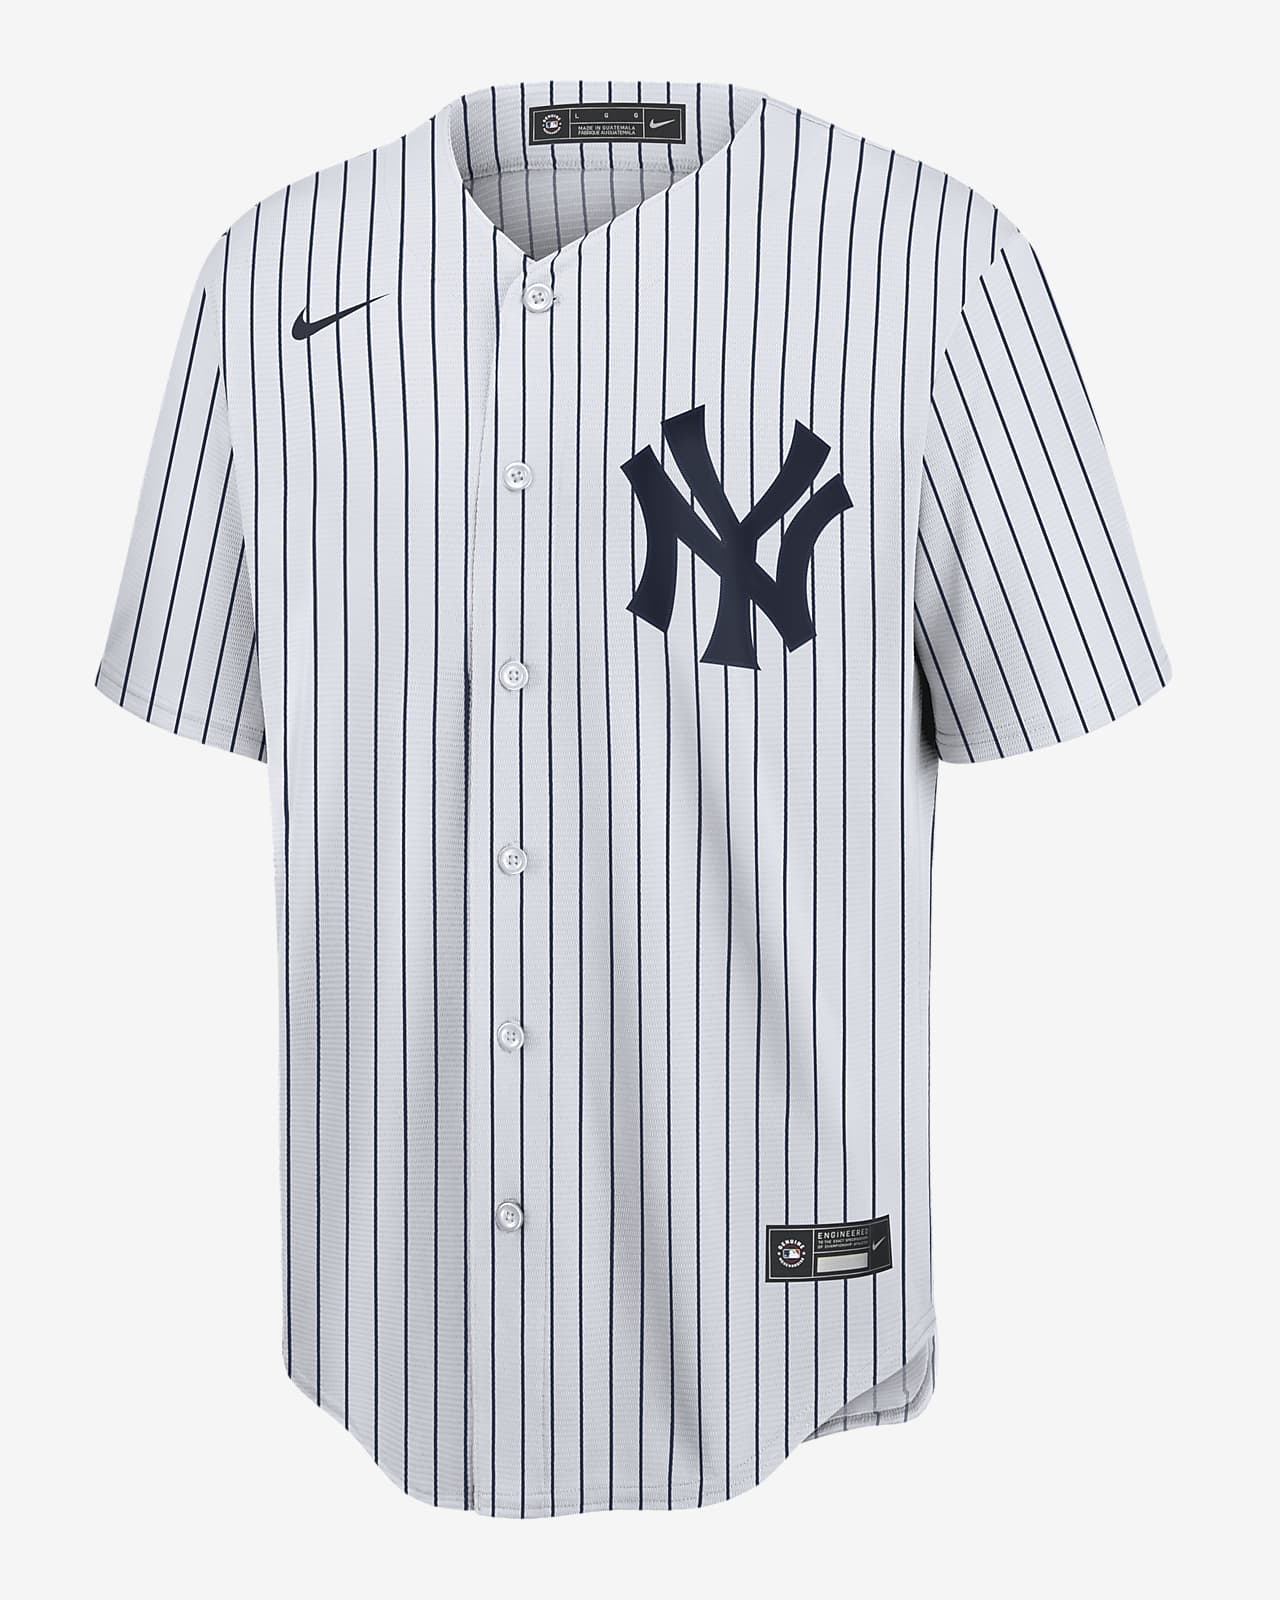 Fobie band Bloesem MLB New York Yankees (Derek Jeter) Men's Replica Baseball Jersey. Nike.com